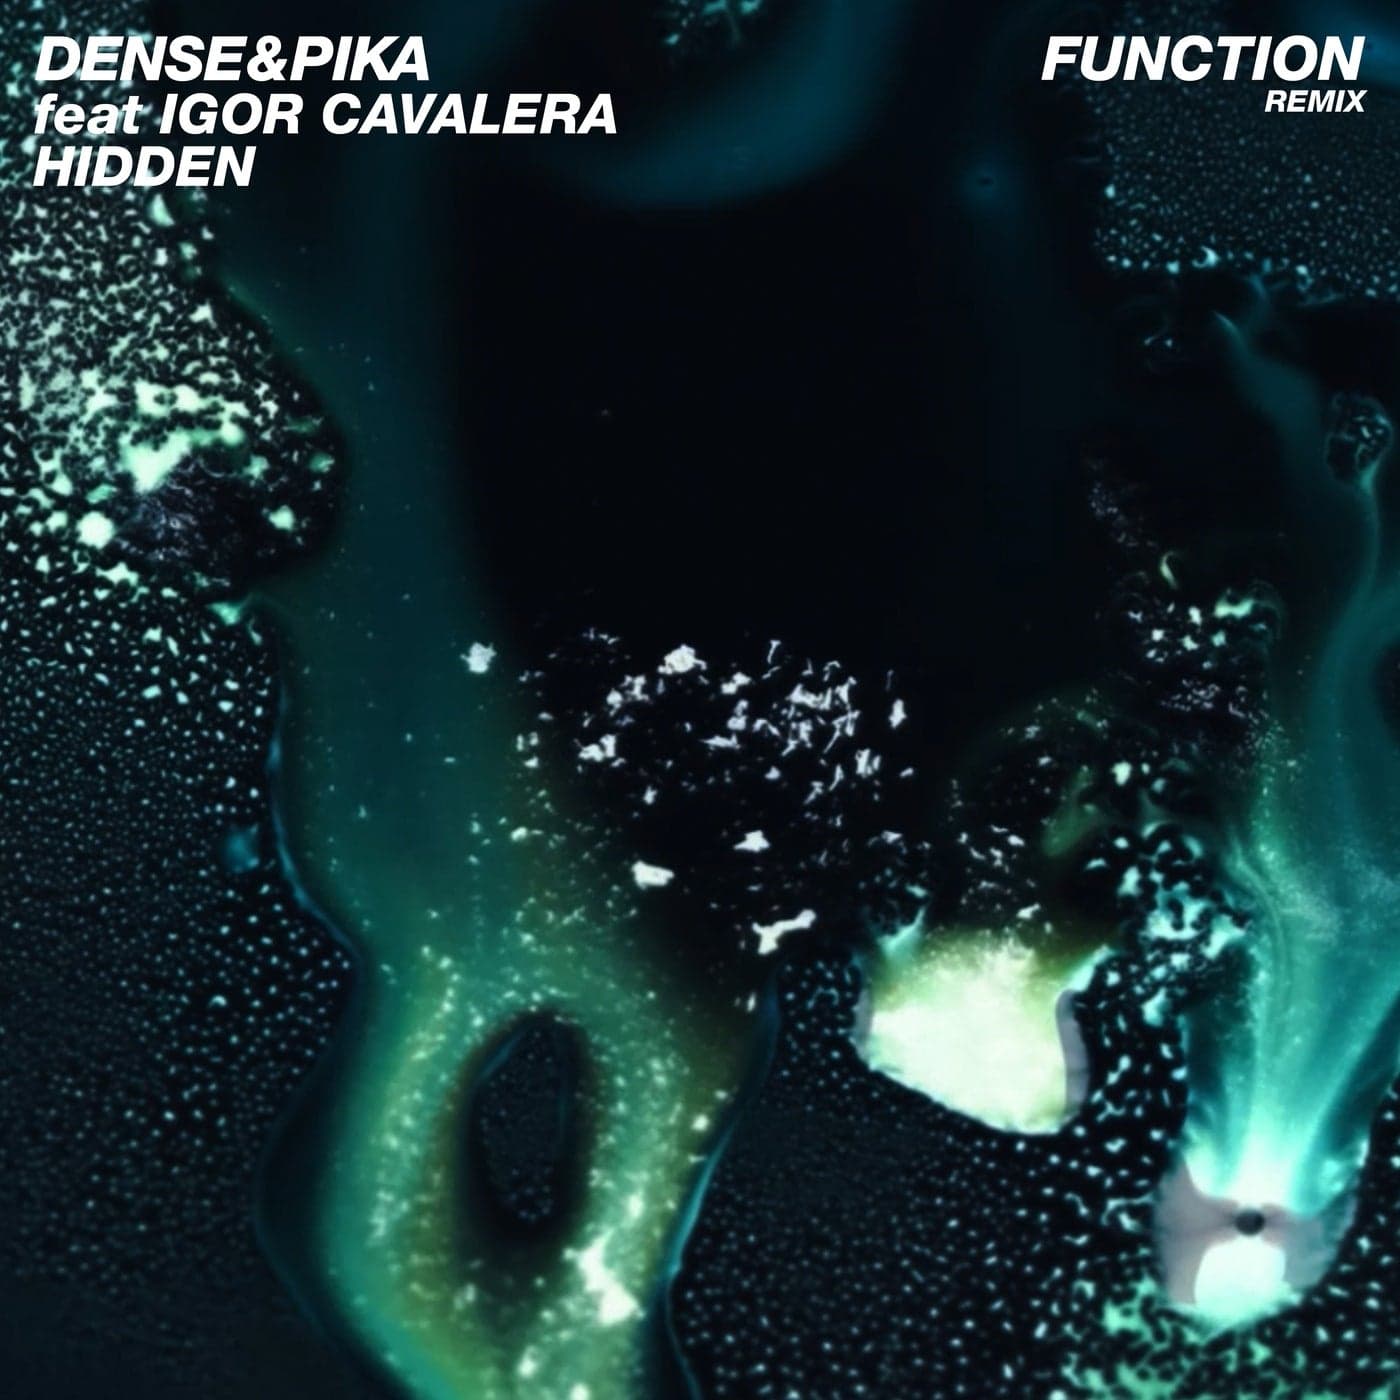 image cover: Dense & Pika, Igor Cavalera - Hidden feat. Igor Cavalera (Function Remix) / KP115